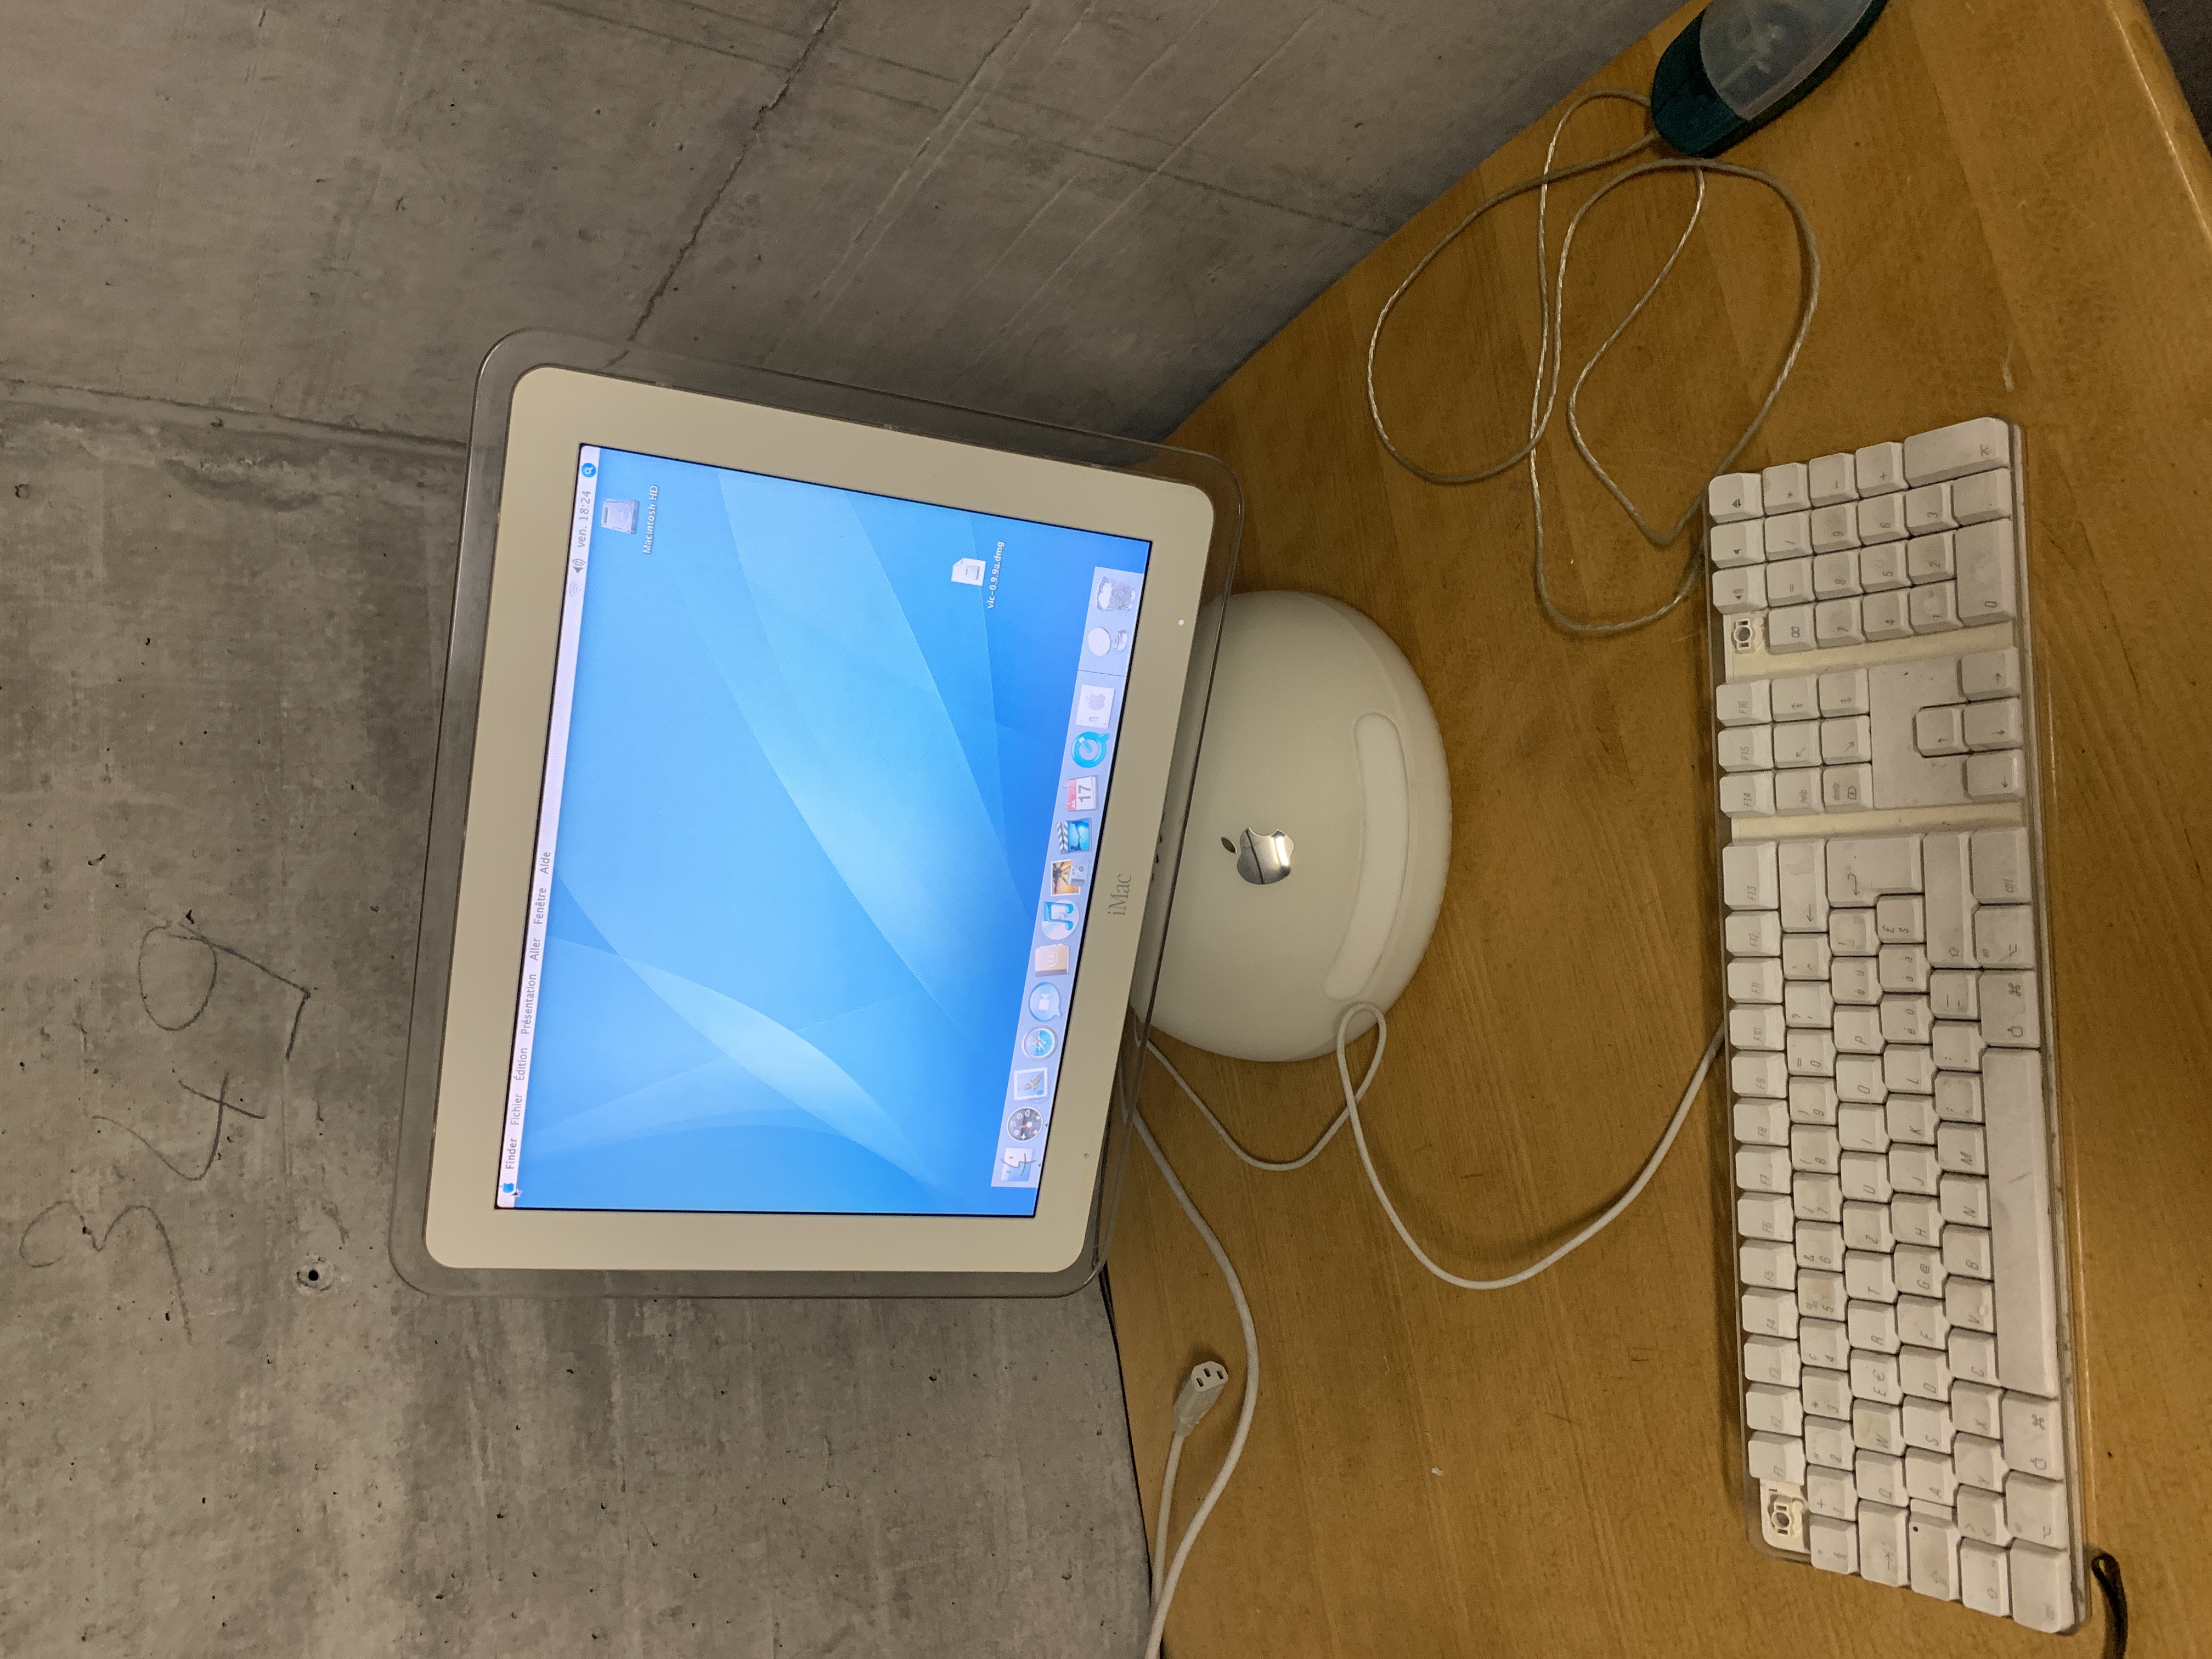 iMac G4 FlatPanel